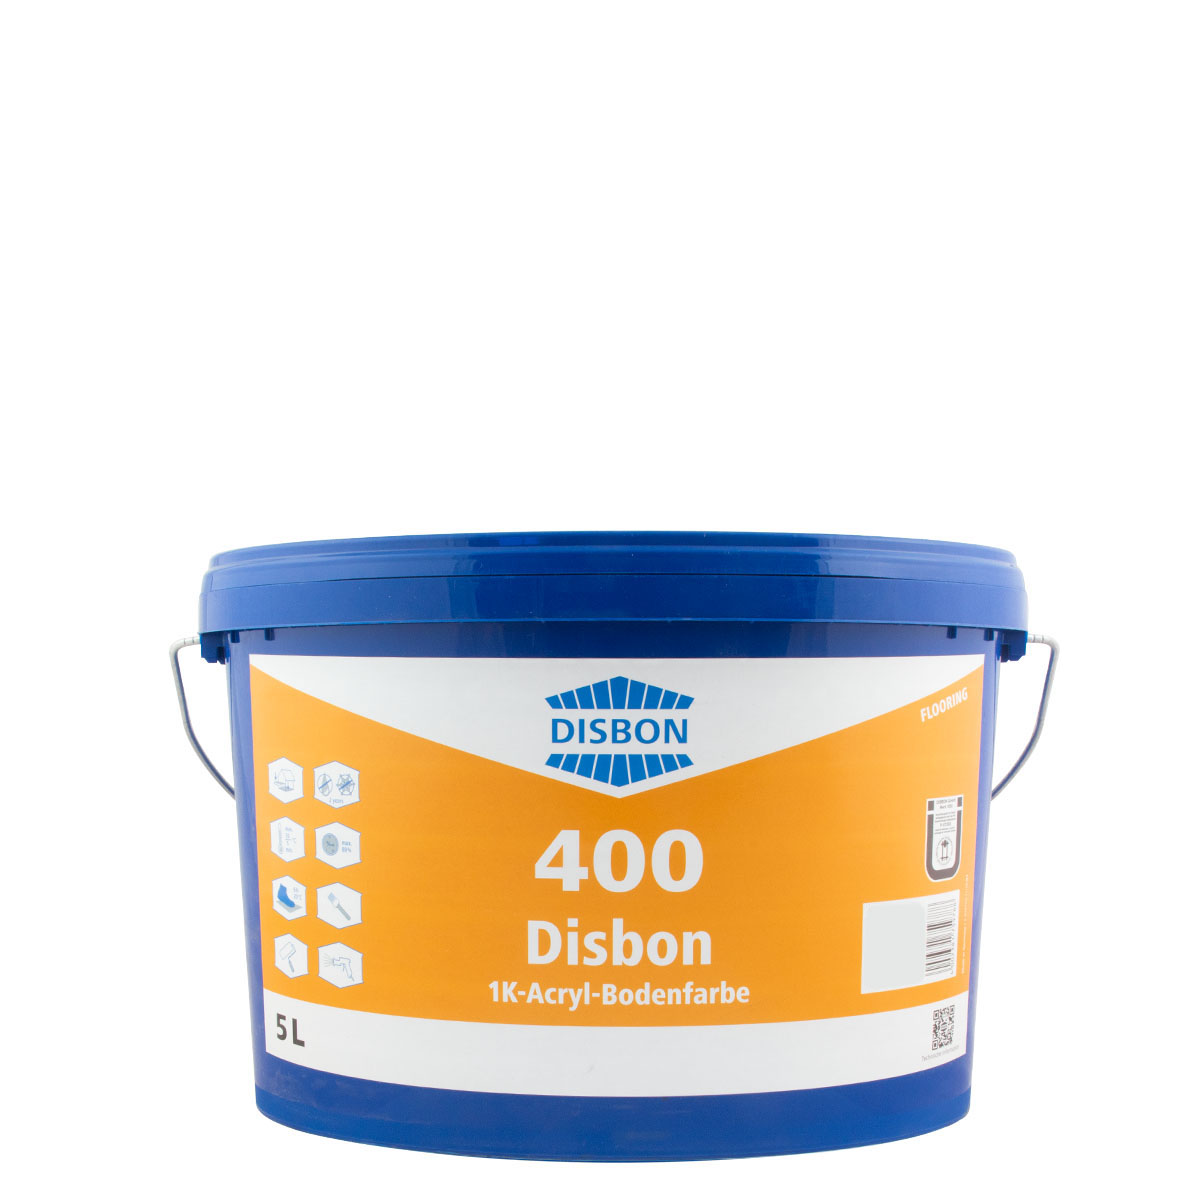 Disbon_400_disbon_5L_gross